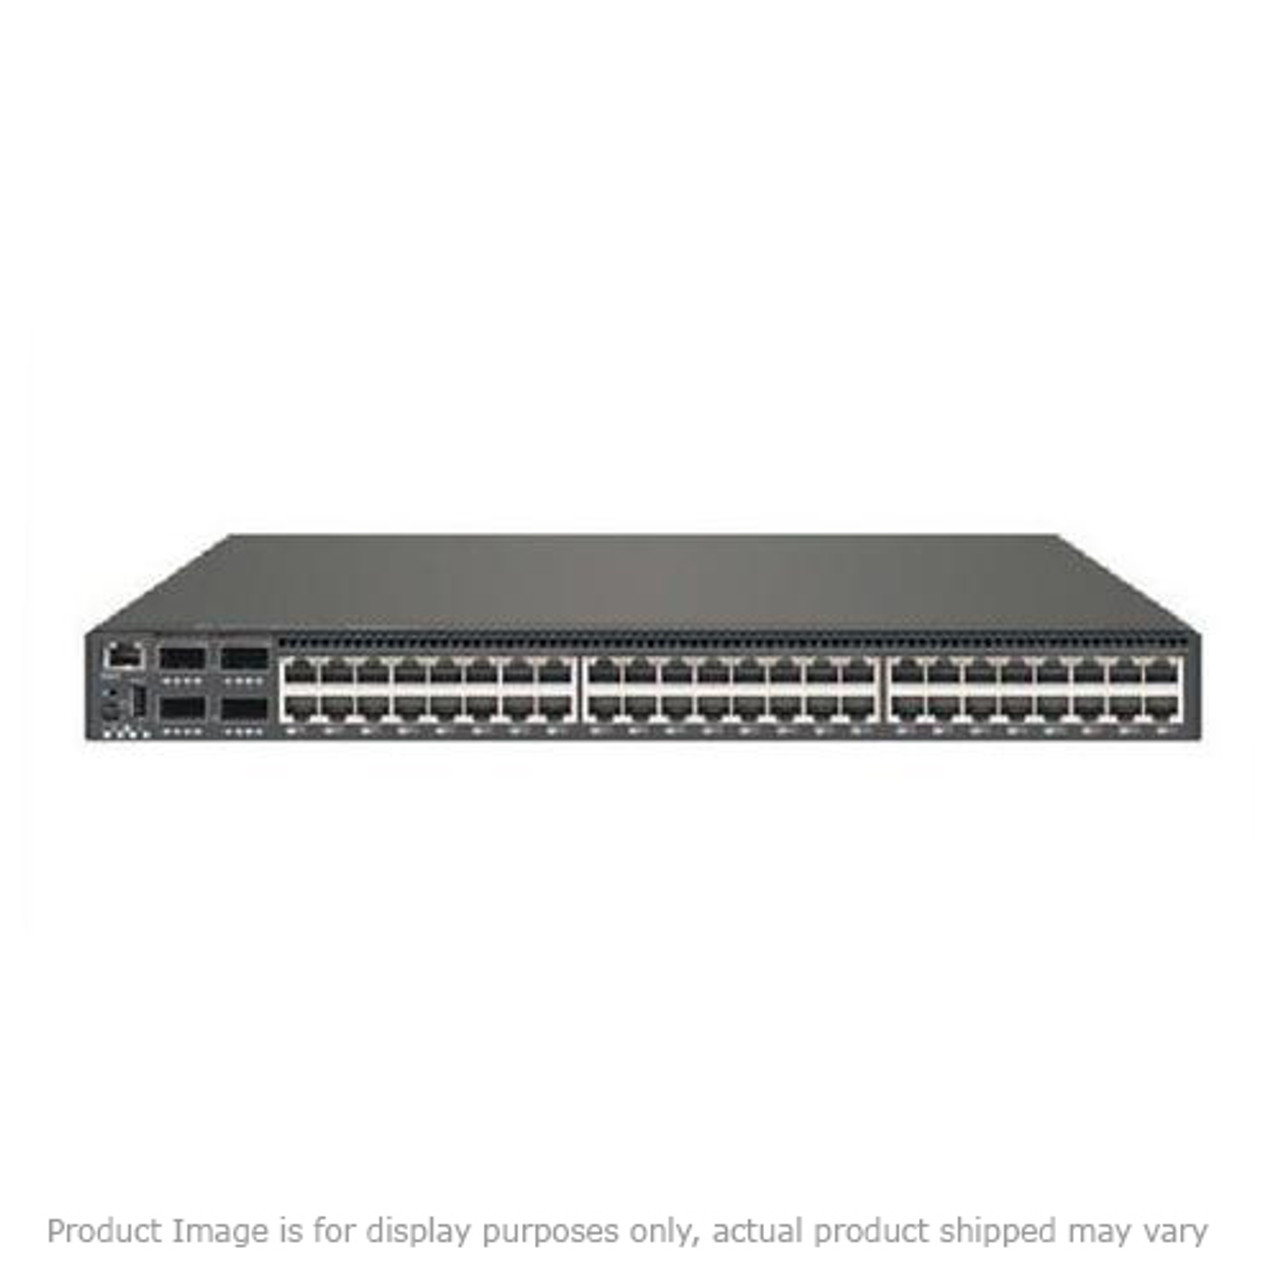 108360850 Alcatel-Lucent Cajun P115G 24 Port Autosensing 10/100 Stackable Switch (Refurbished)